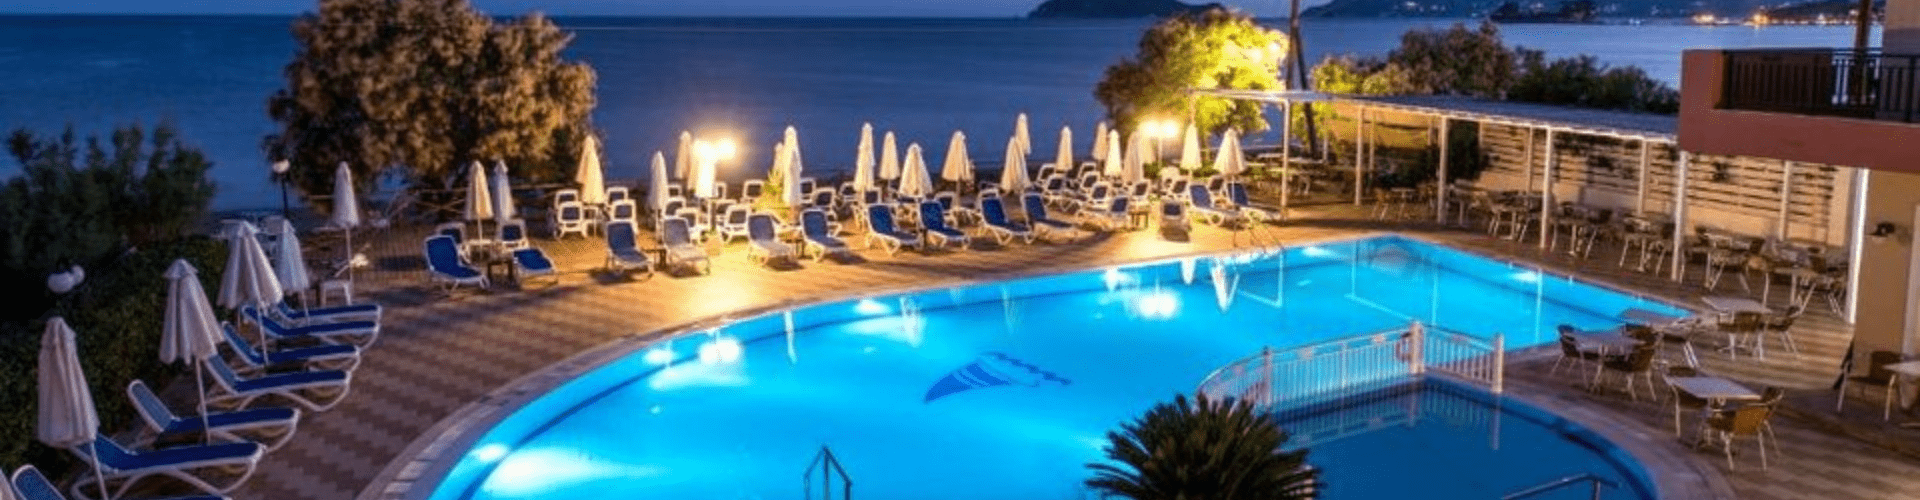 Mediterranean Beach Resort - Zakintos - AquaTravel.rs